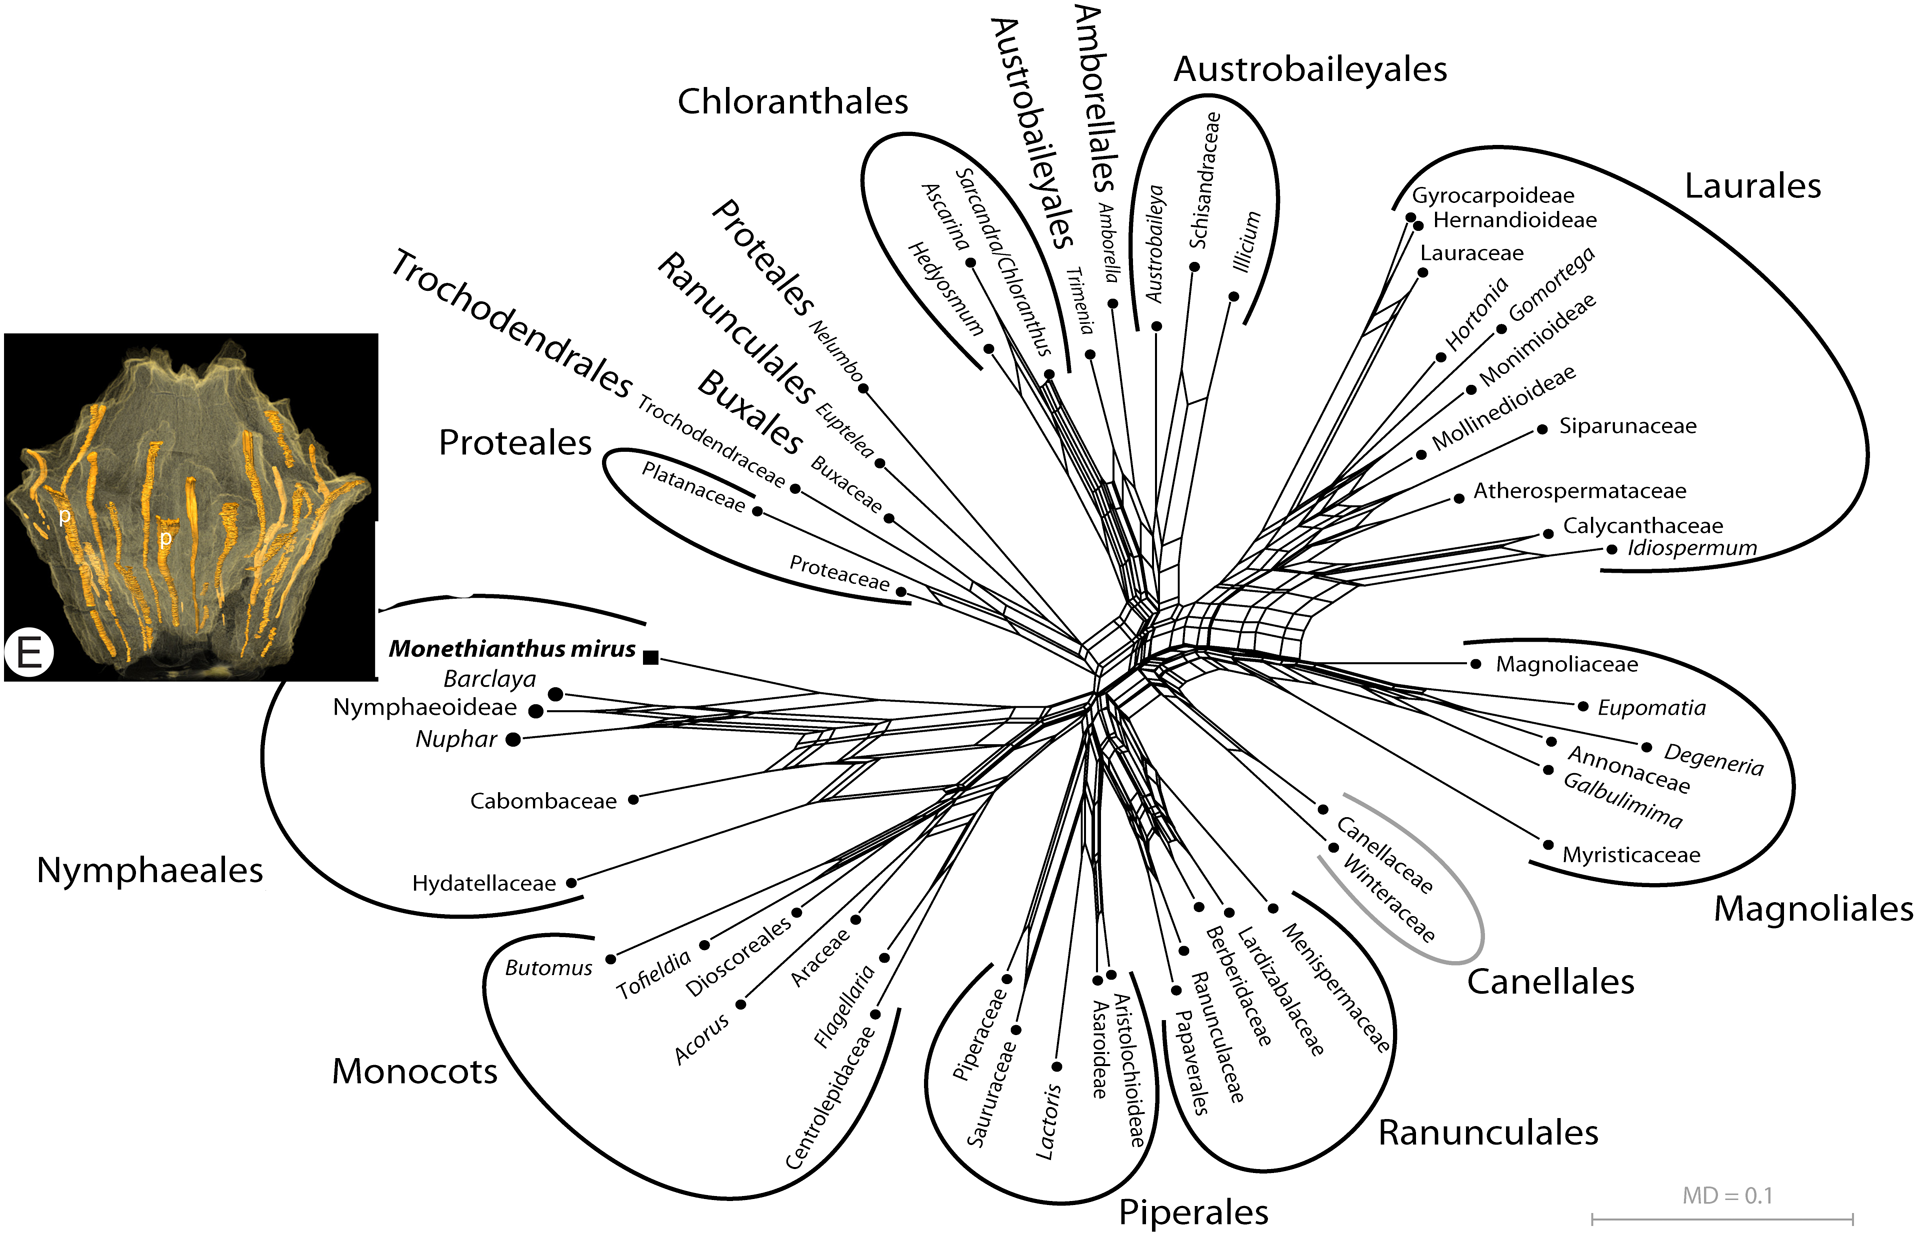 Angiosperm network based on morphological distances including the fossil Monethianthus